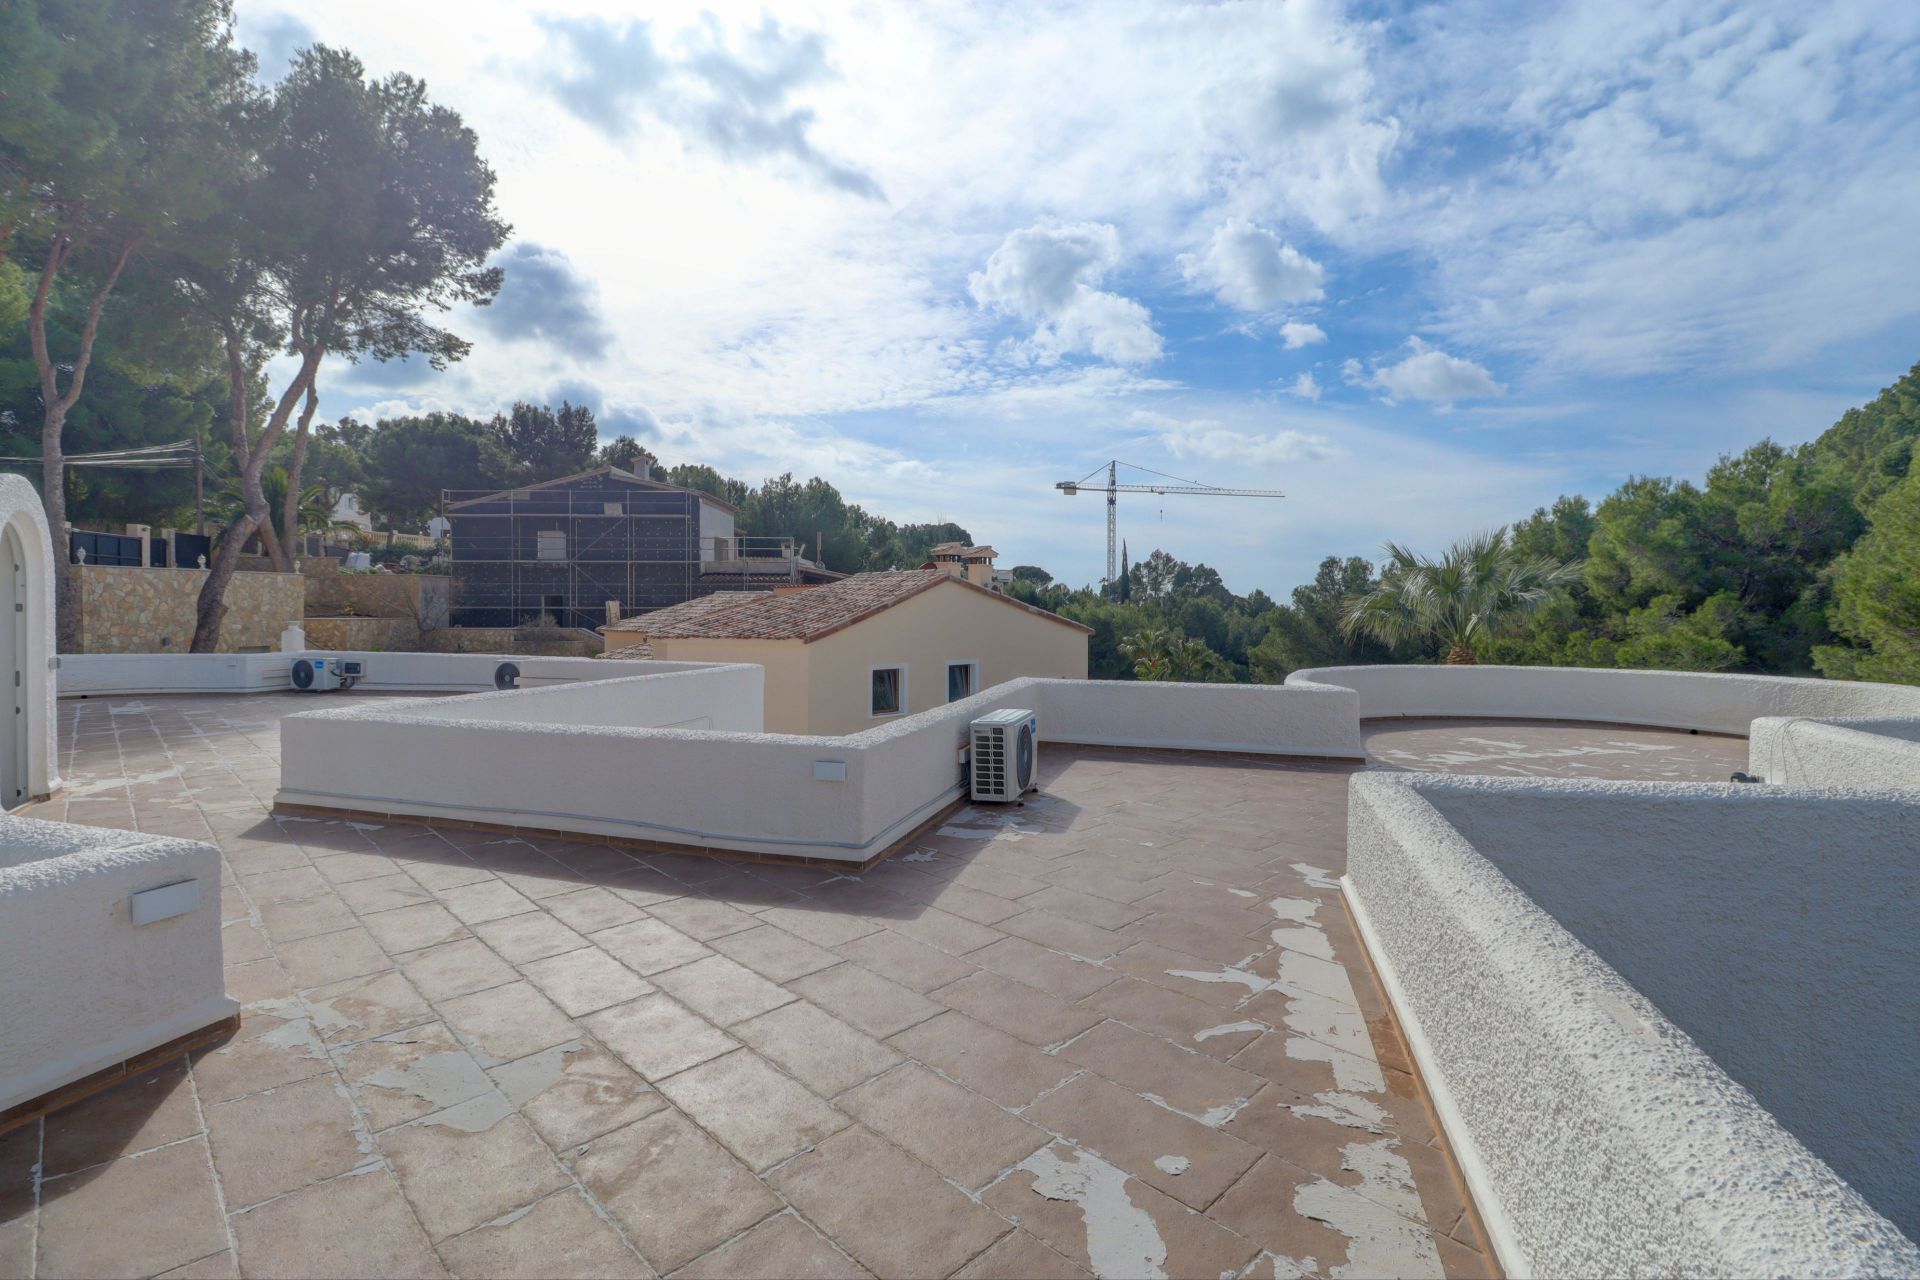 Villa till salu i Mallorca Southwest 6